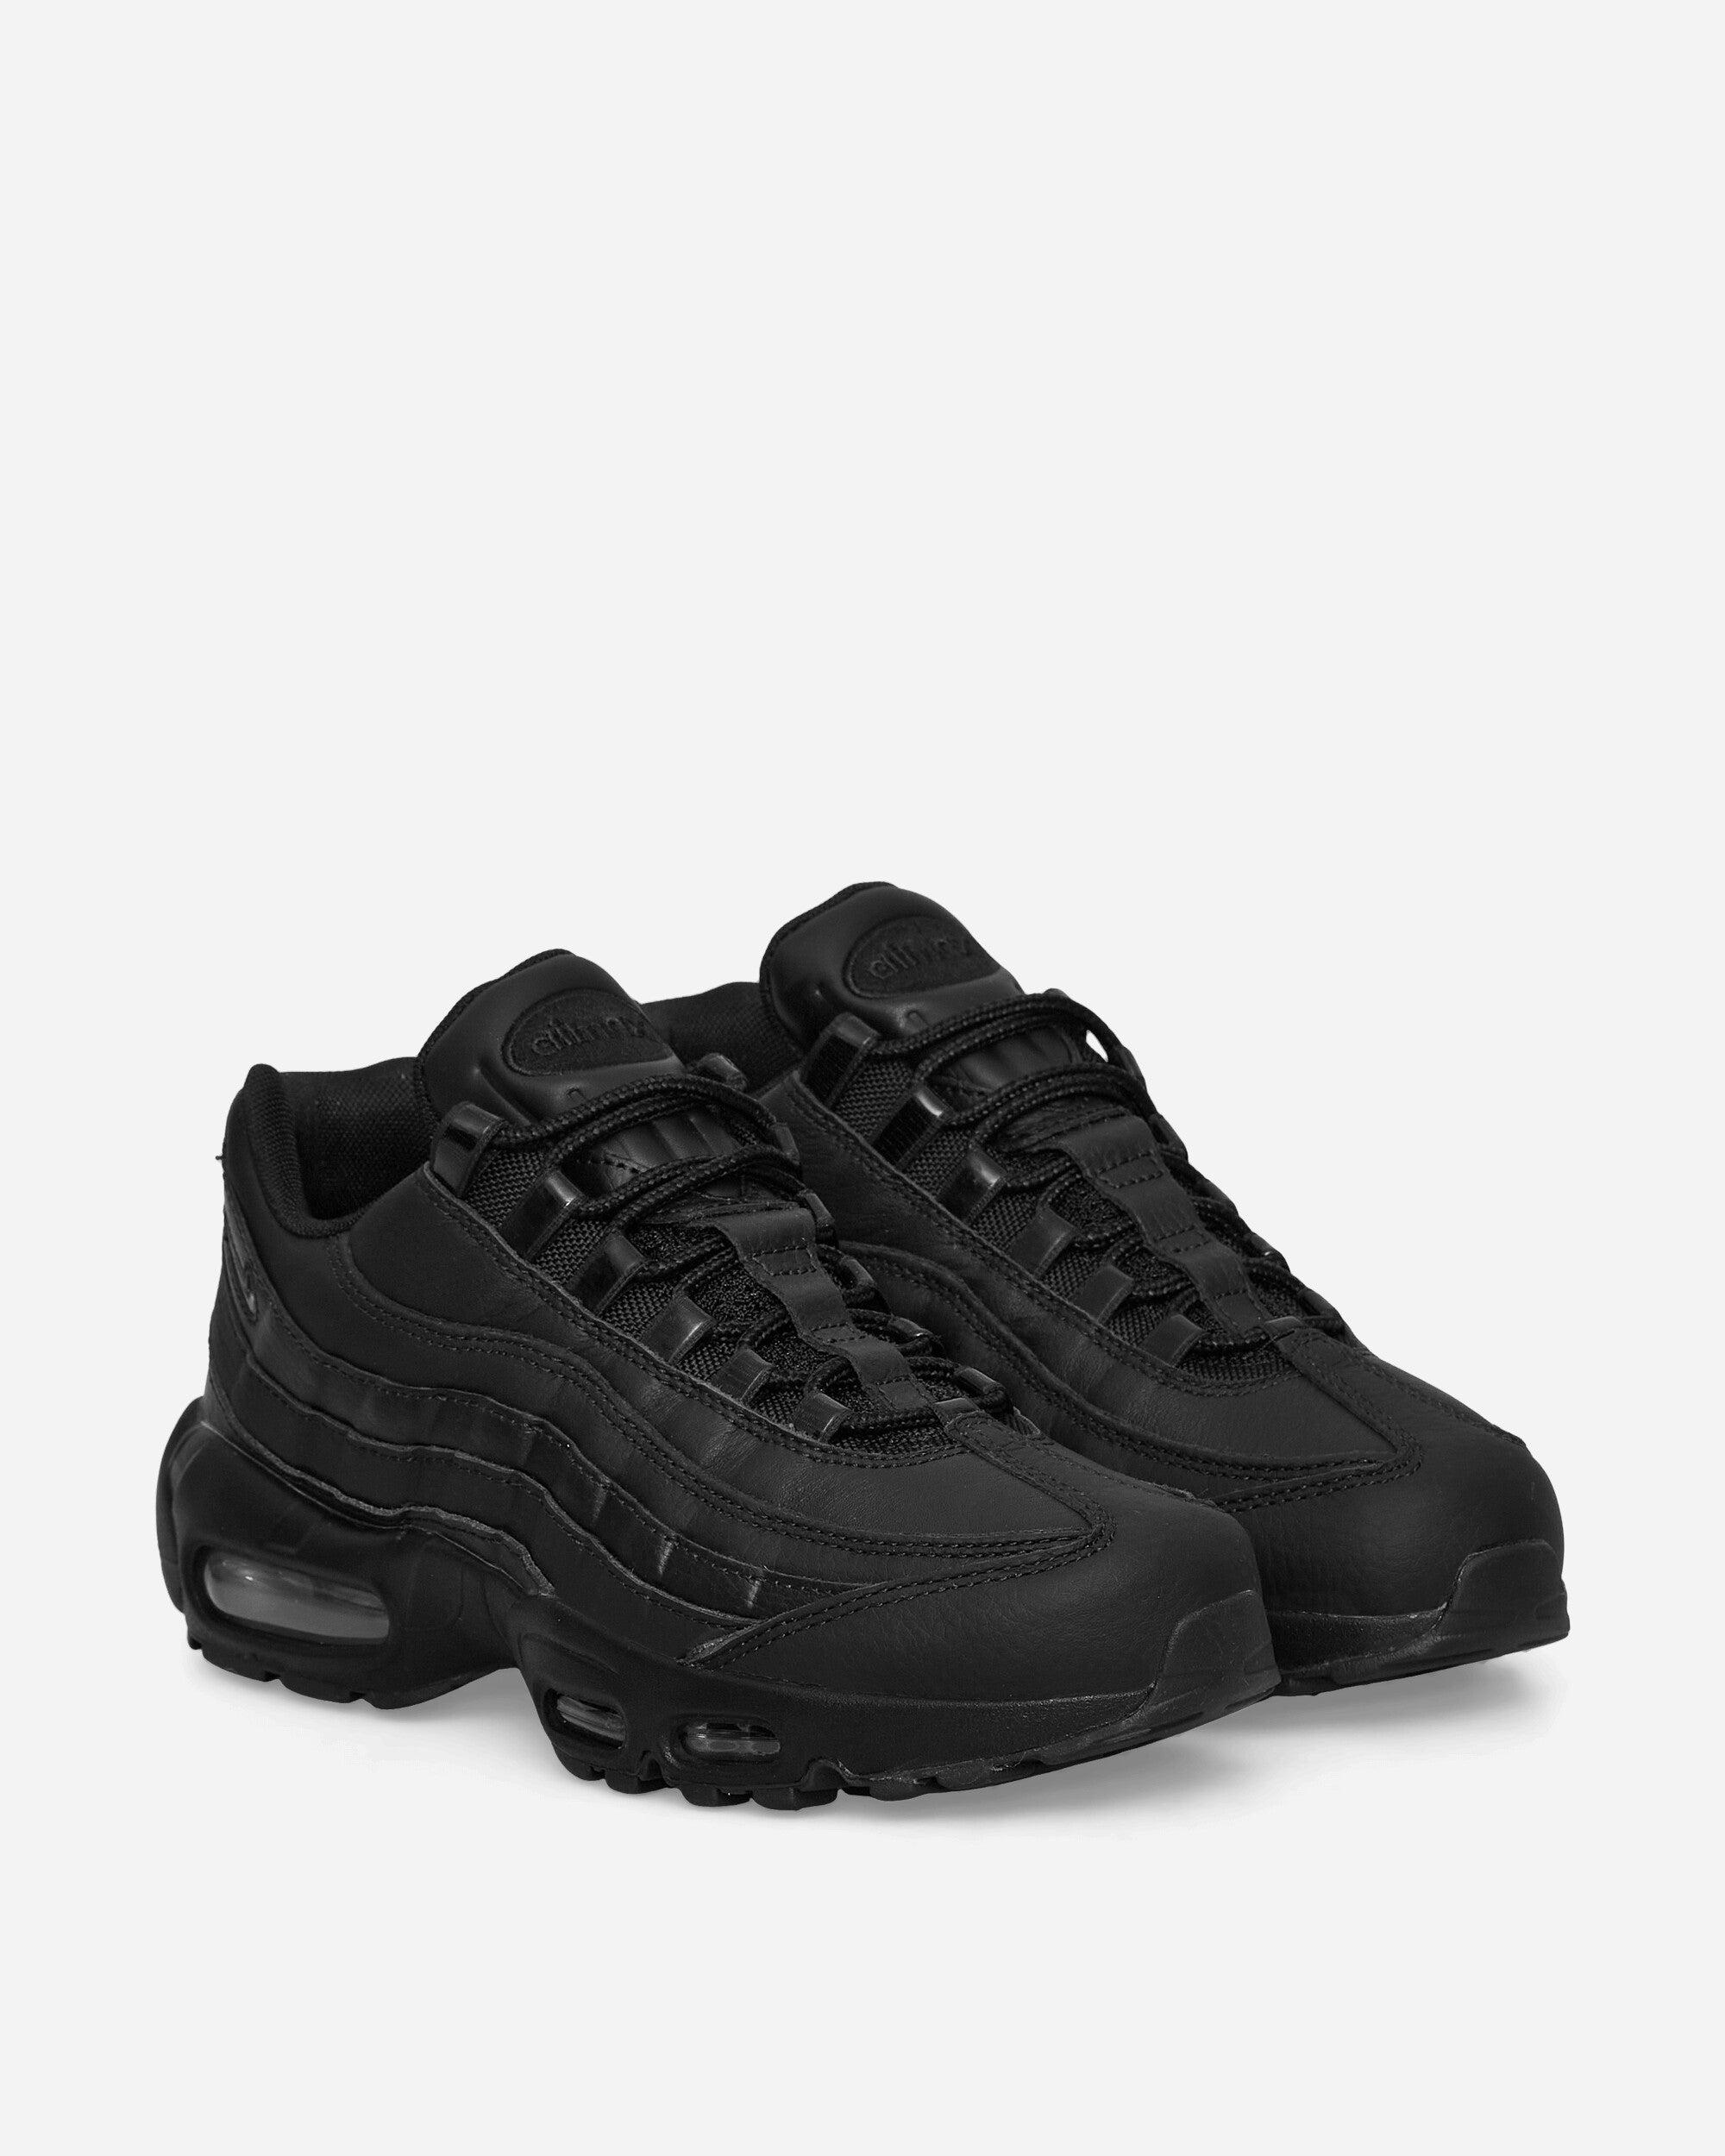 Nike Air Max 95 Sneakers Black / Silver for Men | Lyst